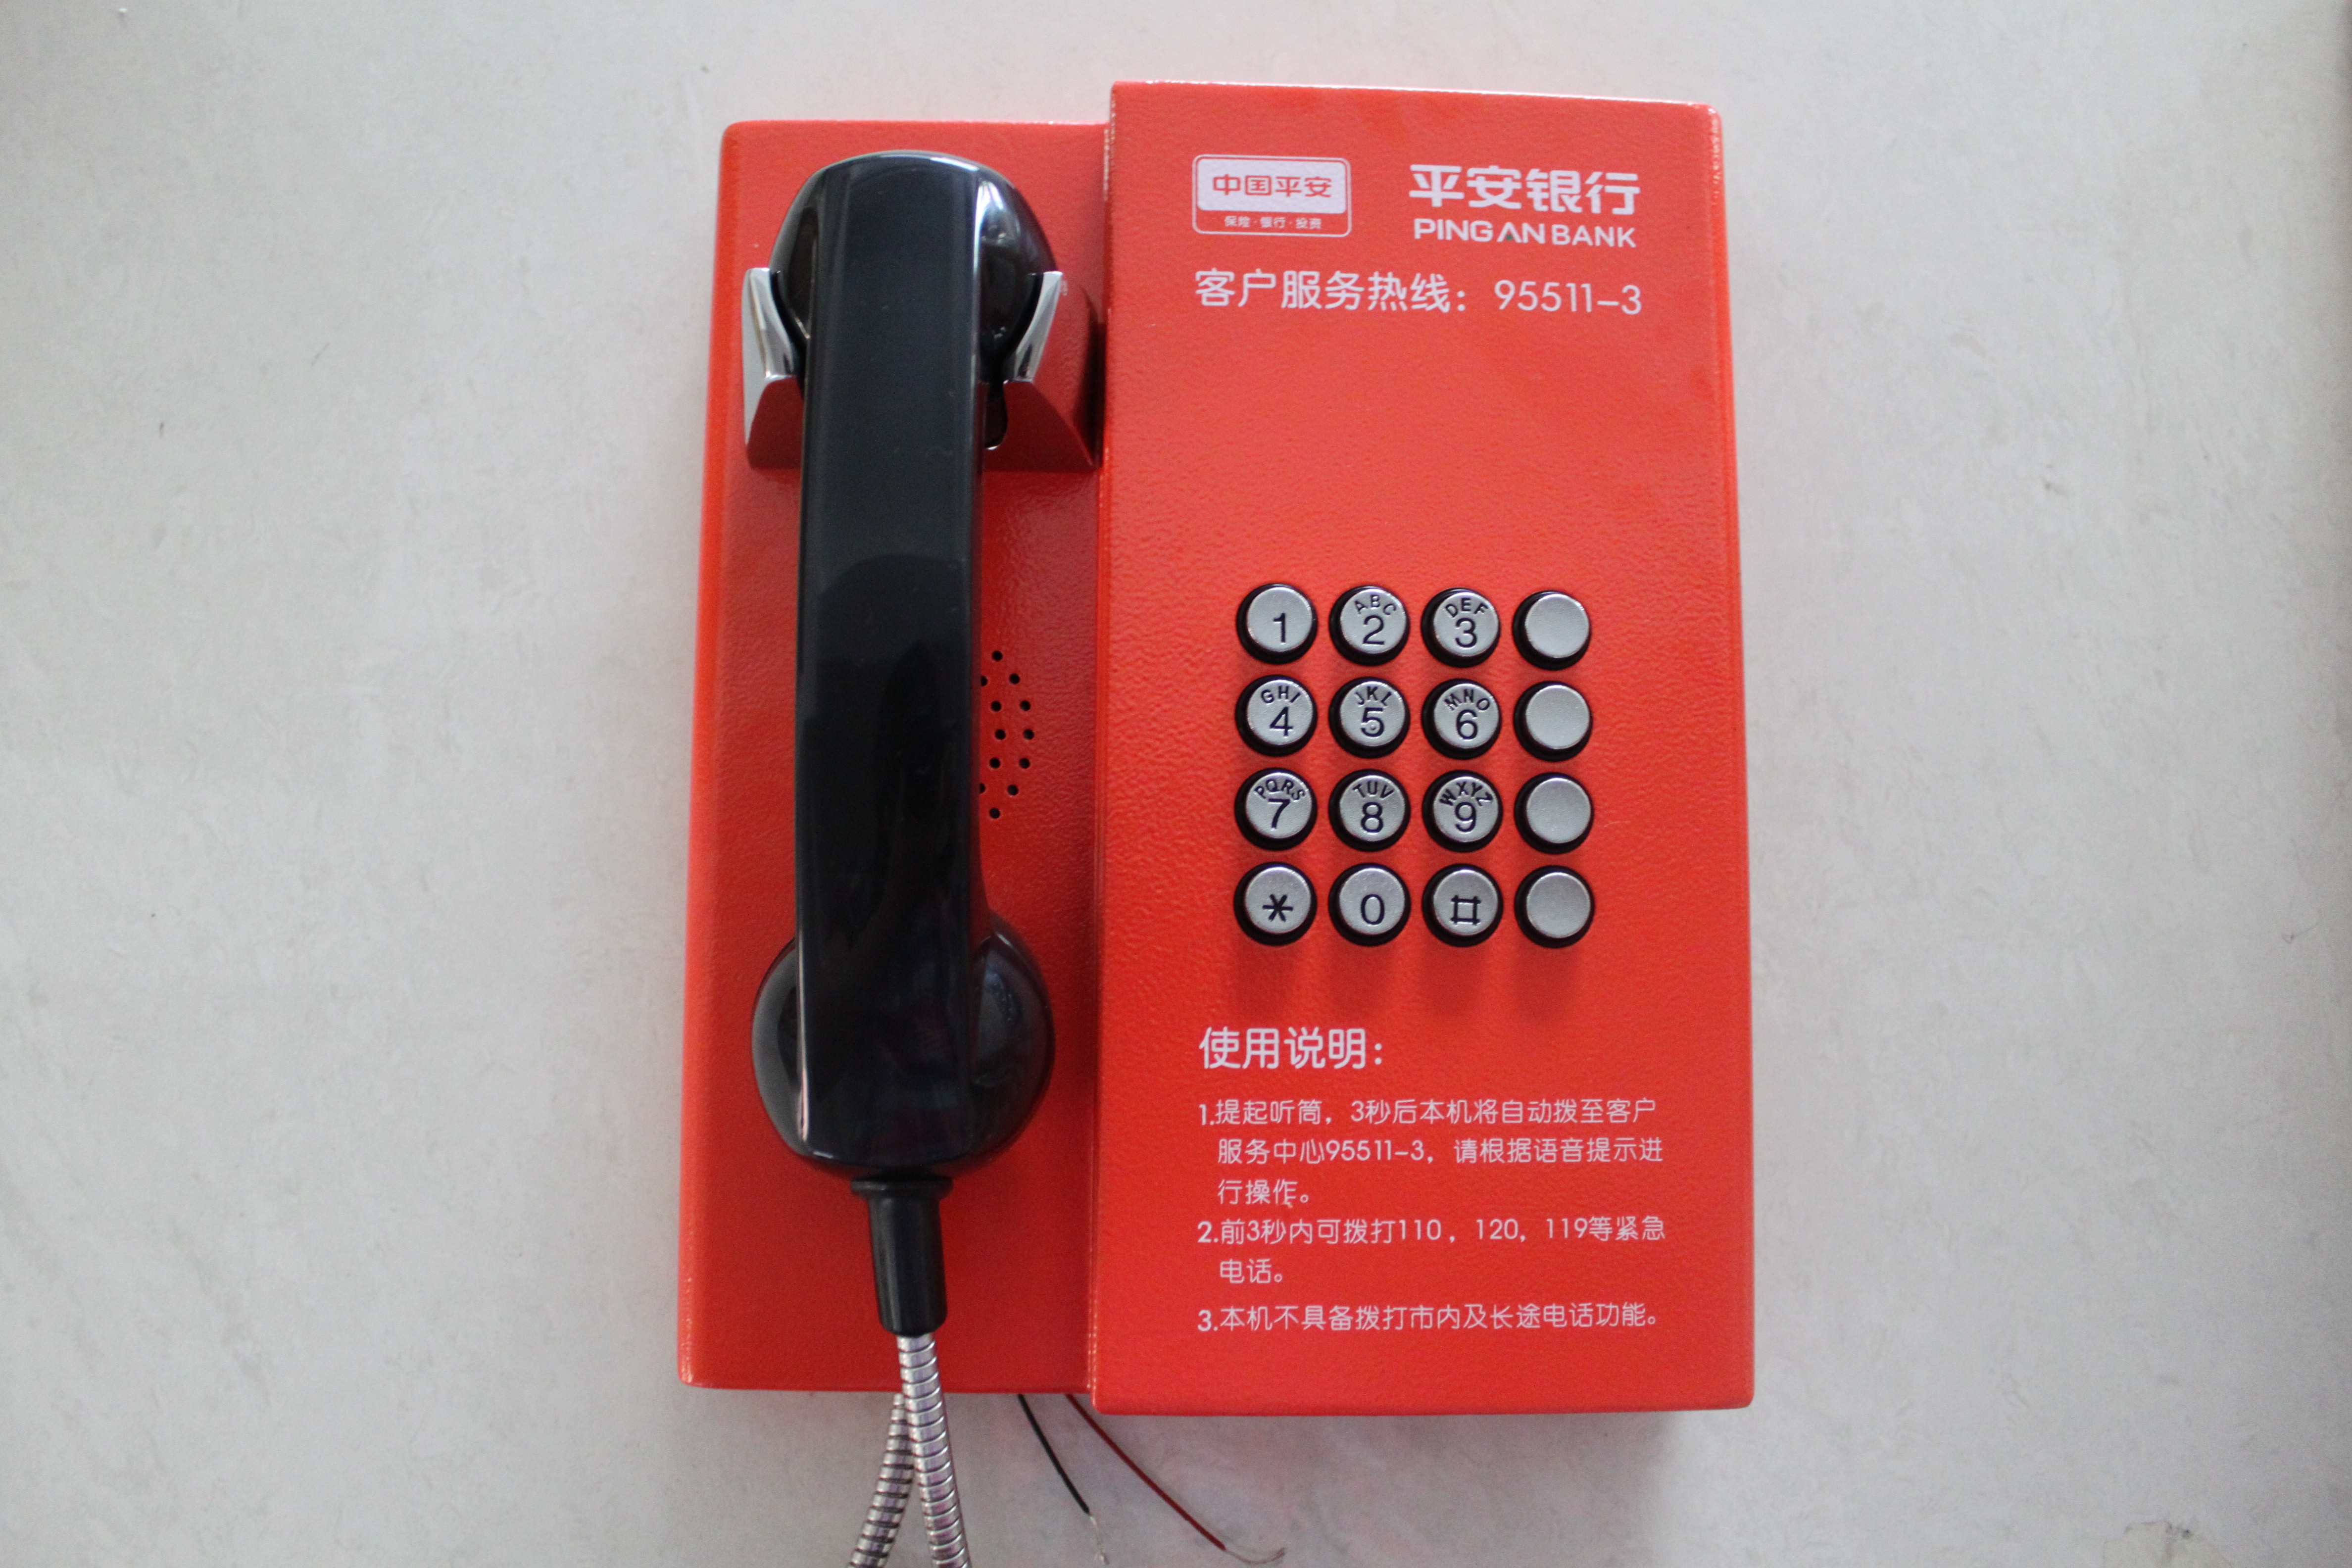 Prison telephone system